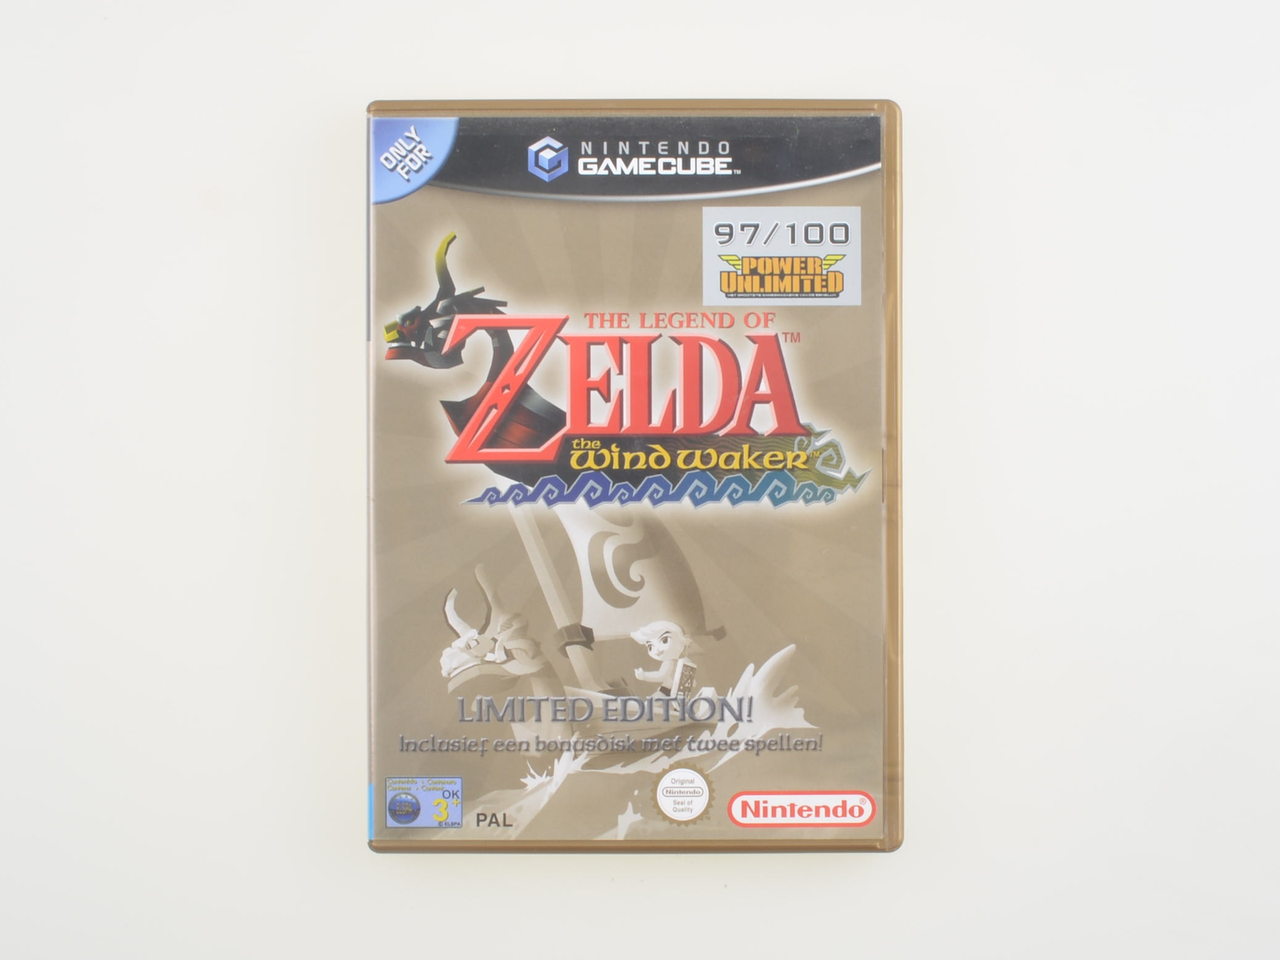 The Legend of Zelda The Windwaker - Limited Edition (Gold Box) | Gamecube Games | RetroNintendoKopen.nl